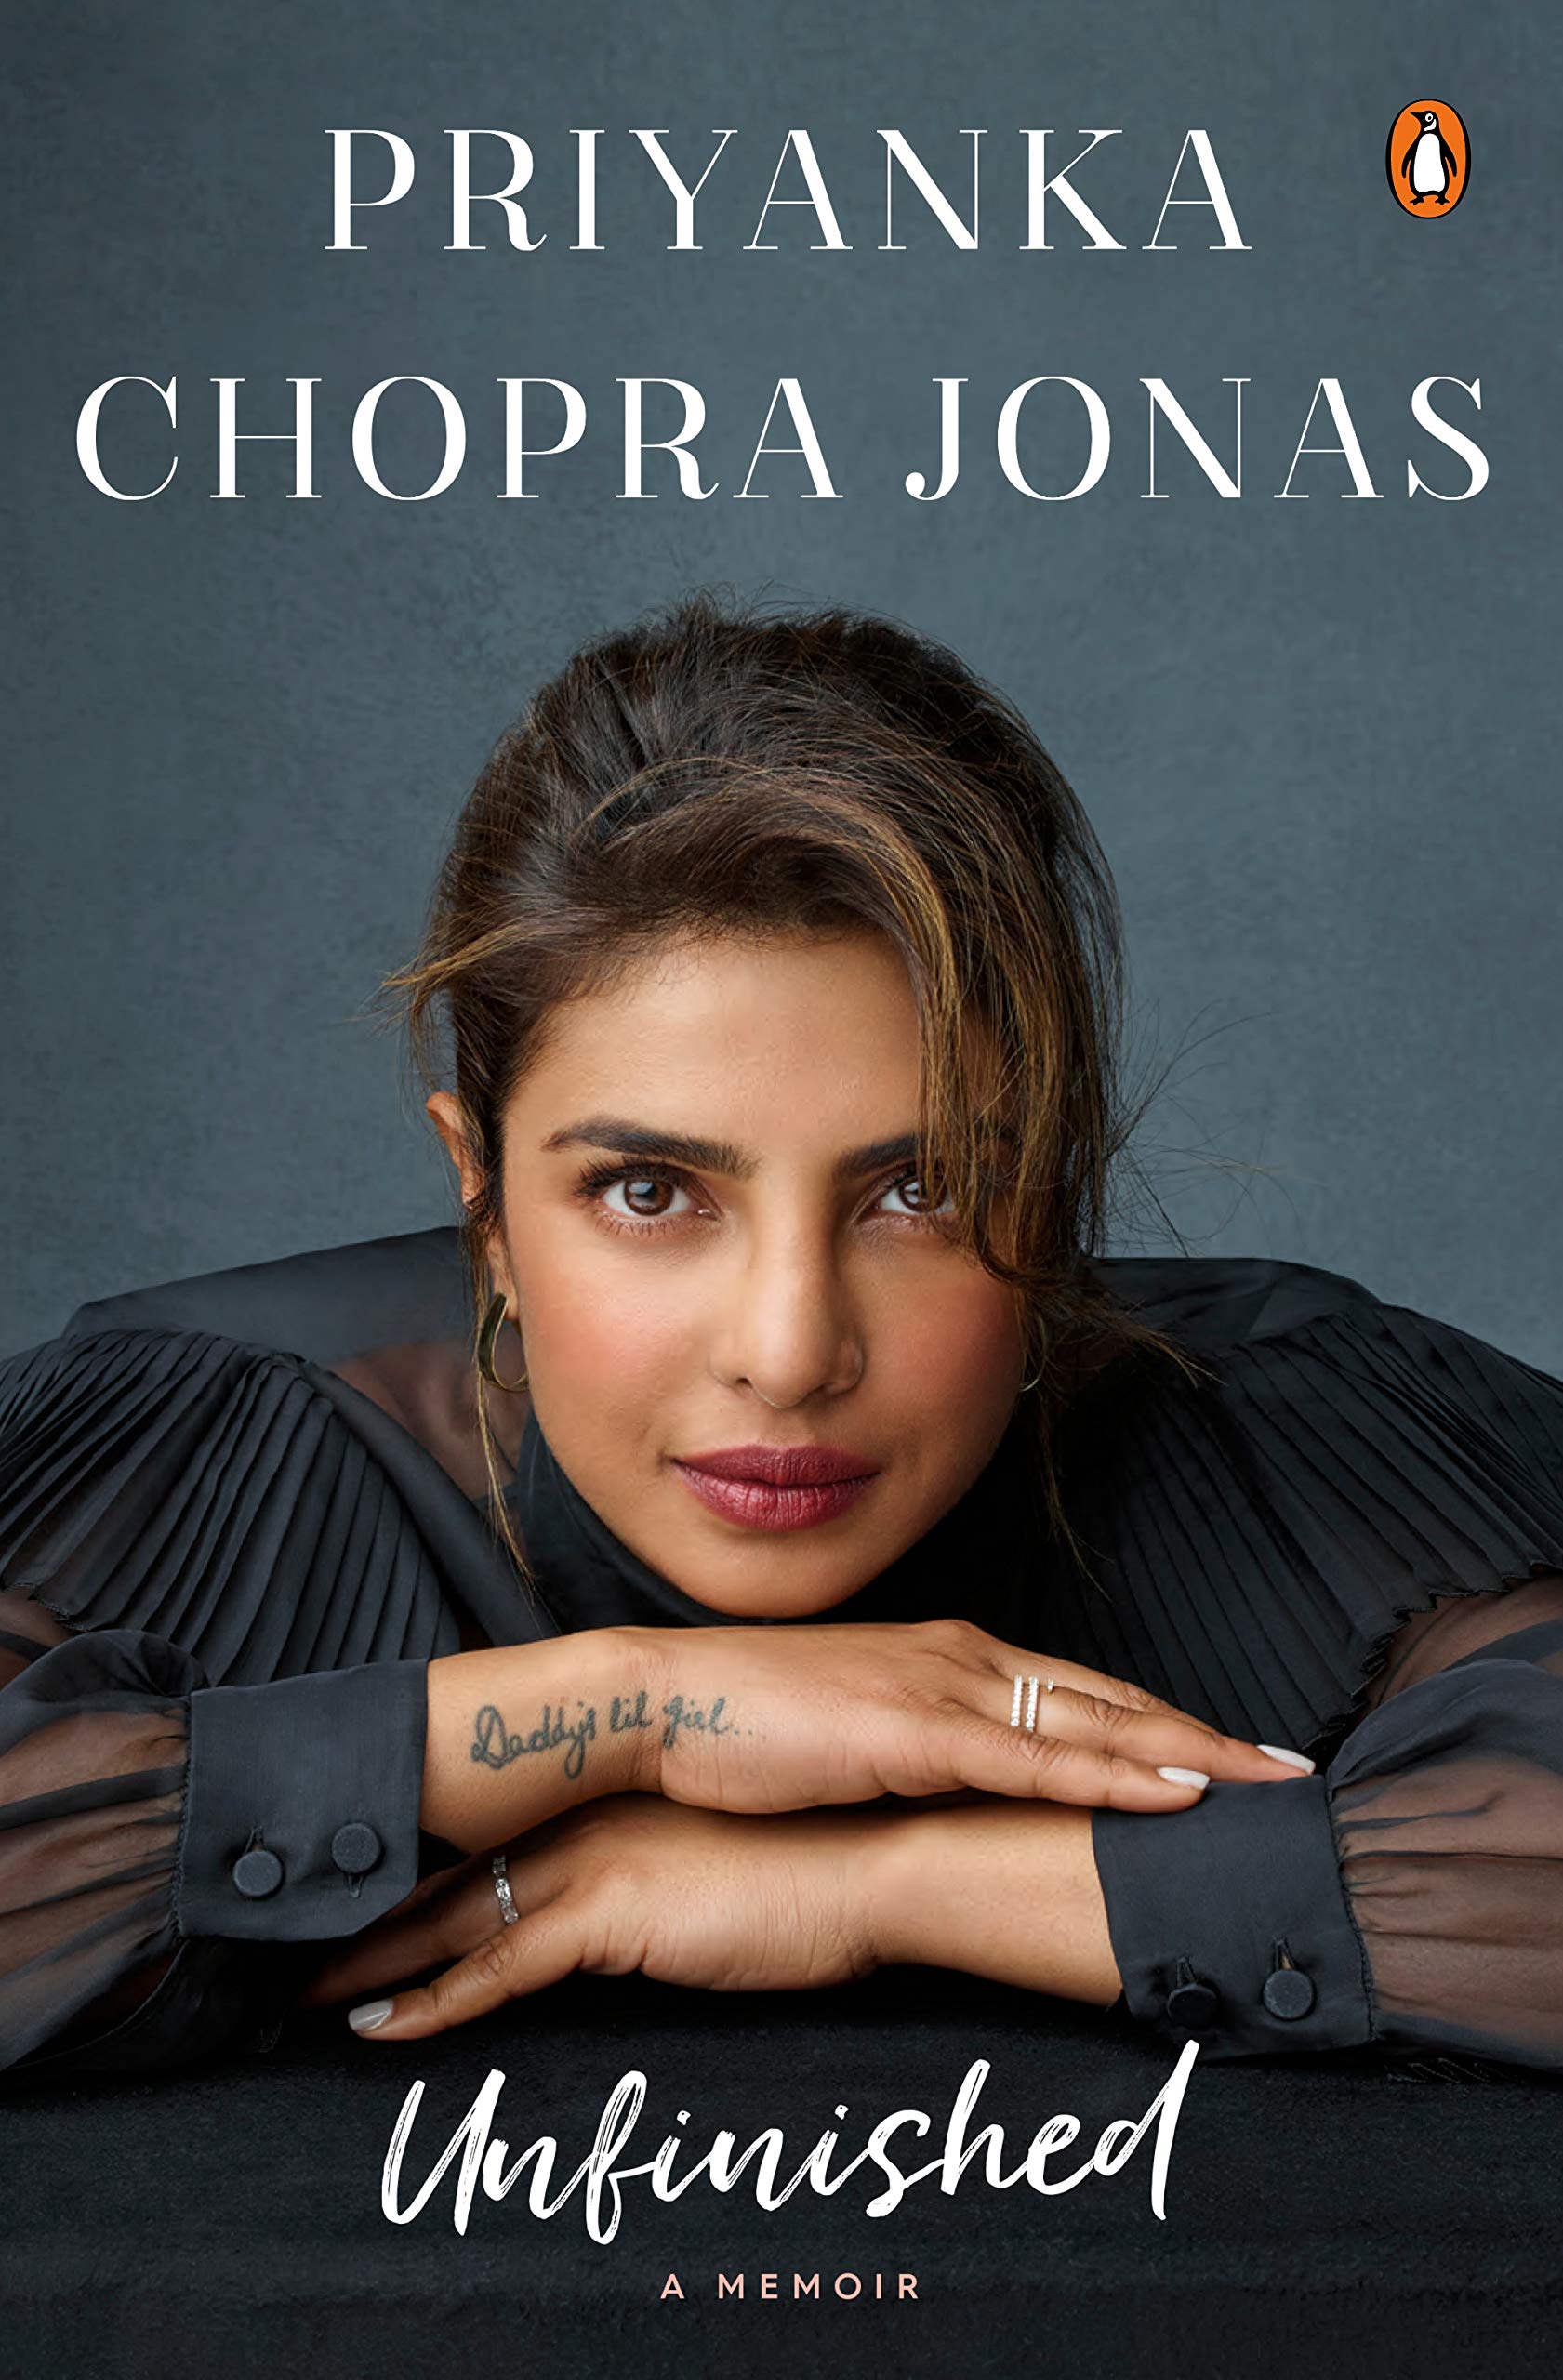 unfinished-a-memoir-by-priyanka-chopra-jonas-hardcover